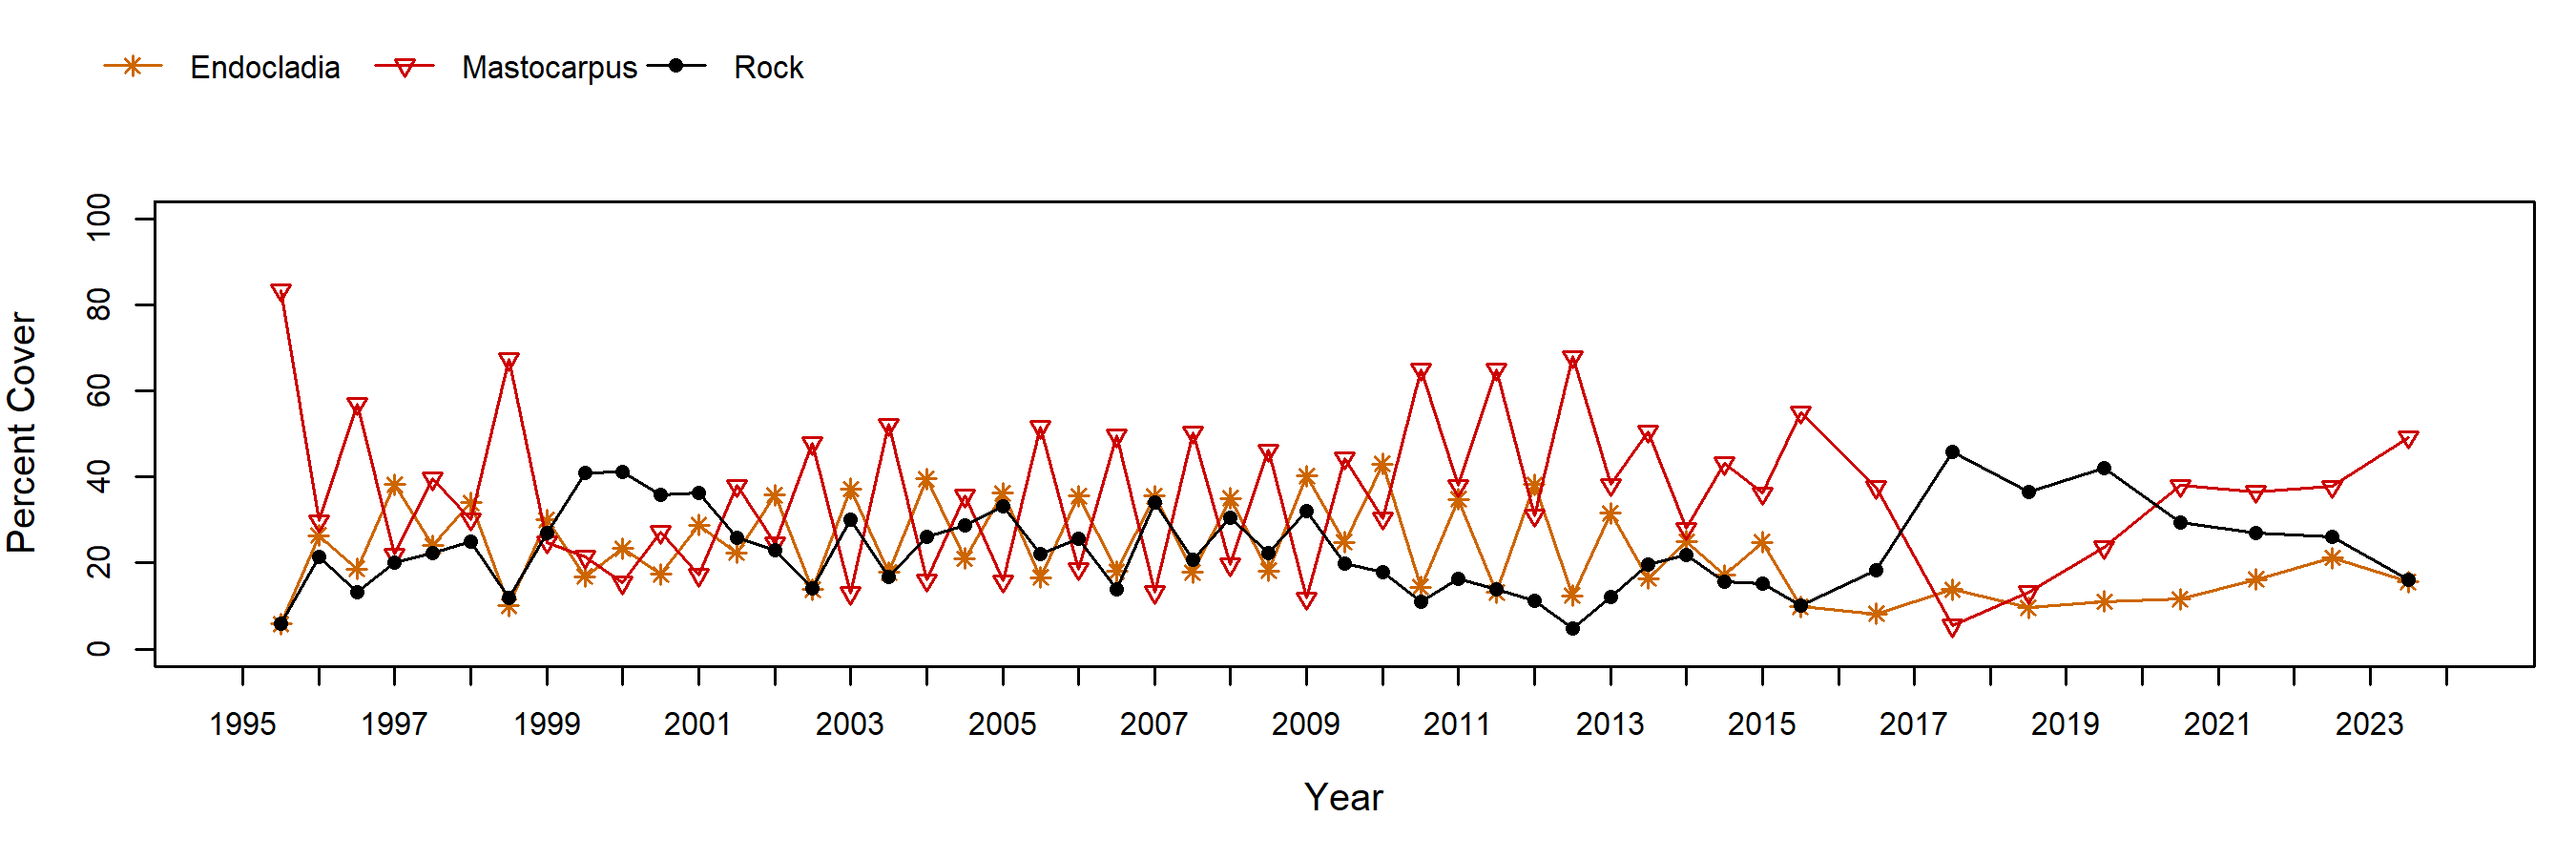 Point Sierra Nevada Mastocarpus trend plot